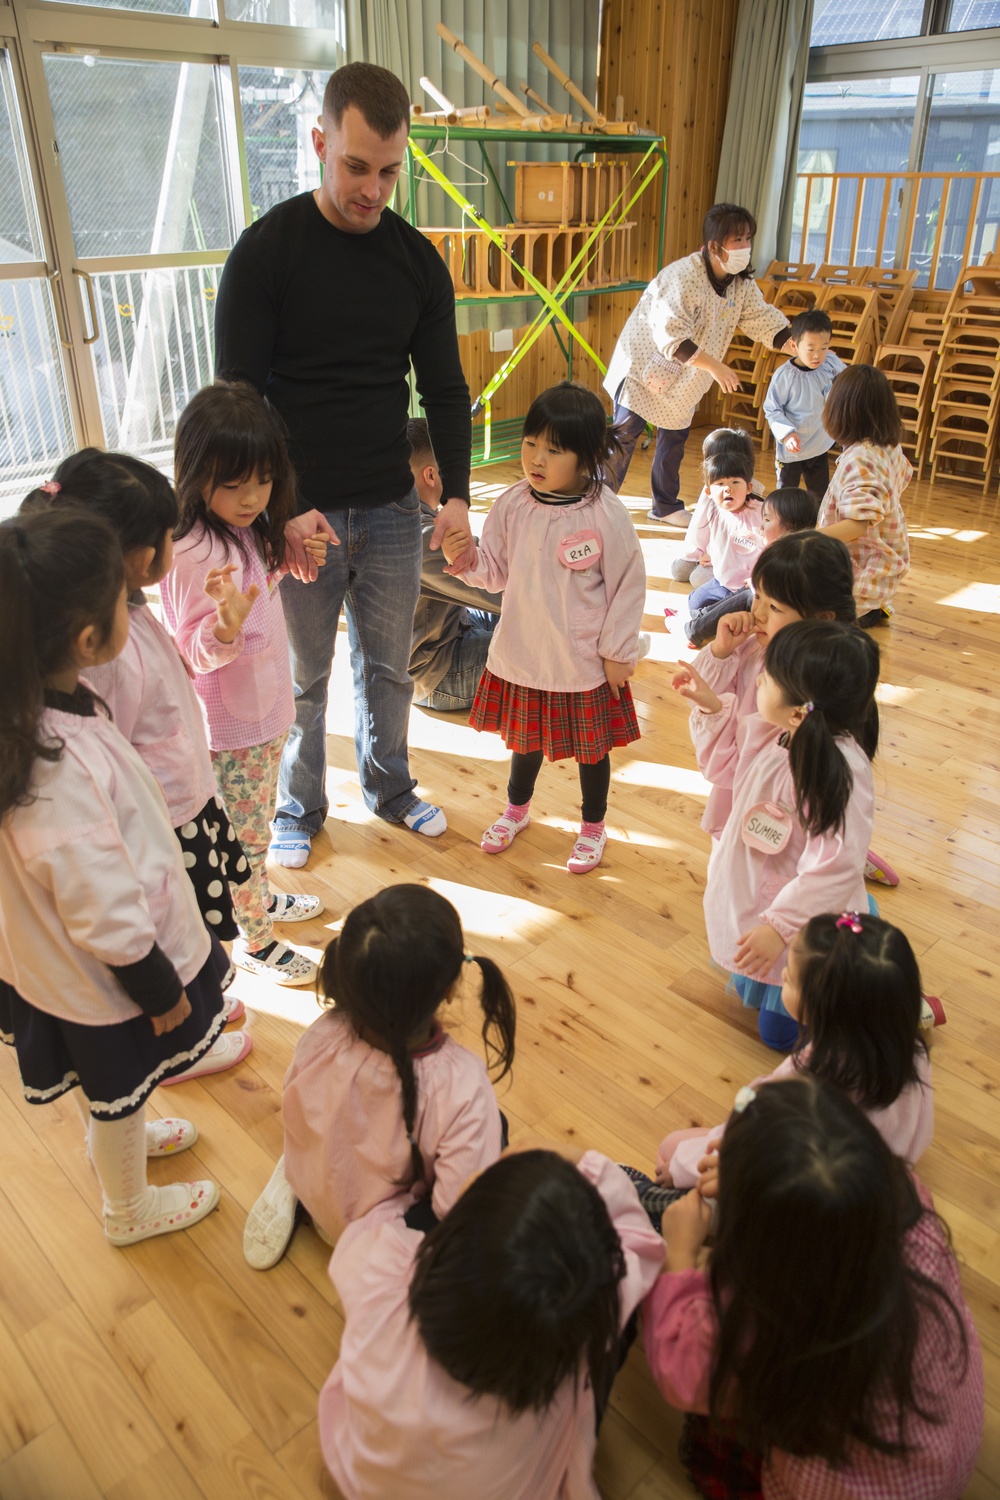 MCAS Iwakuni service members visit preschool teach children English